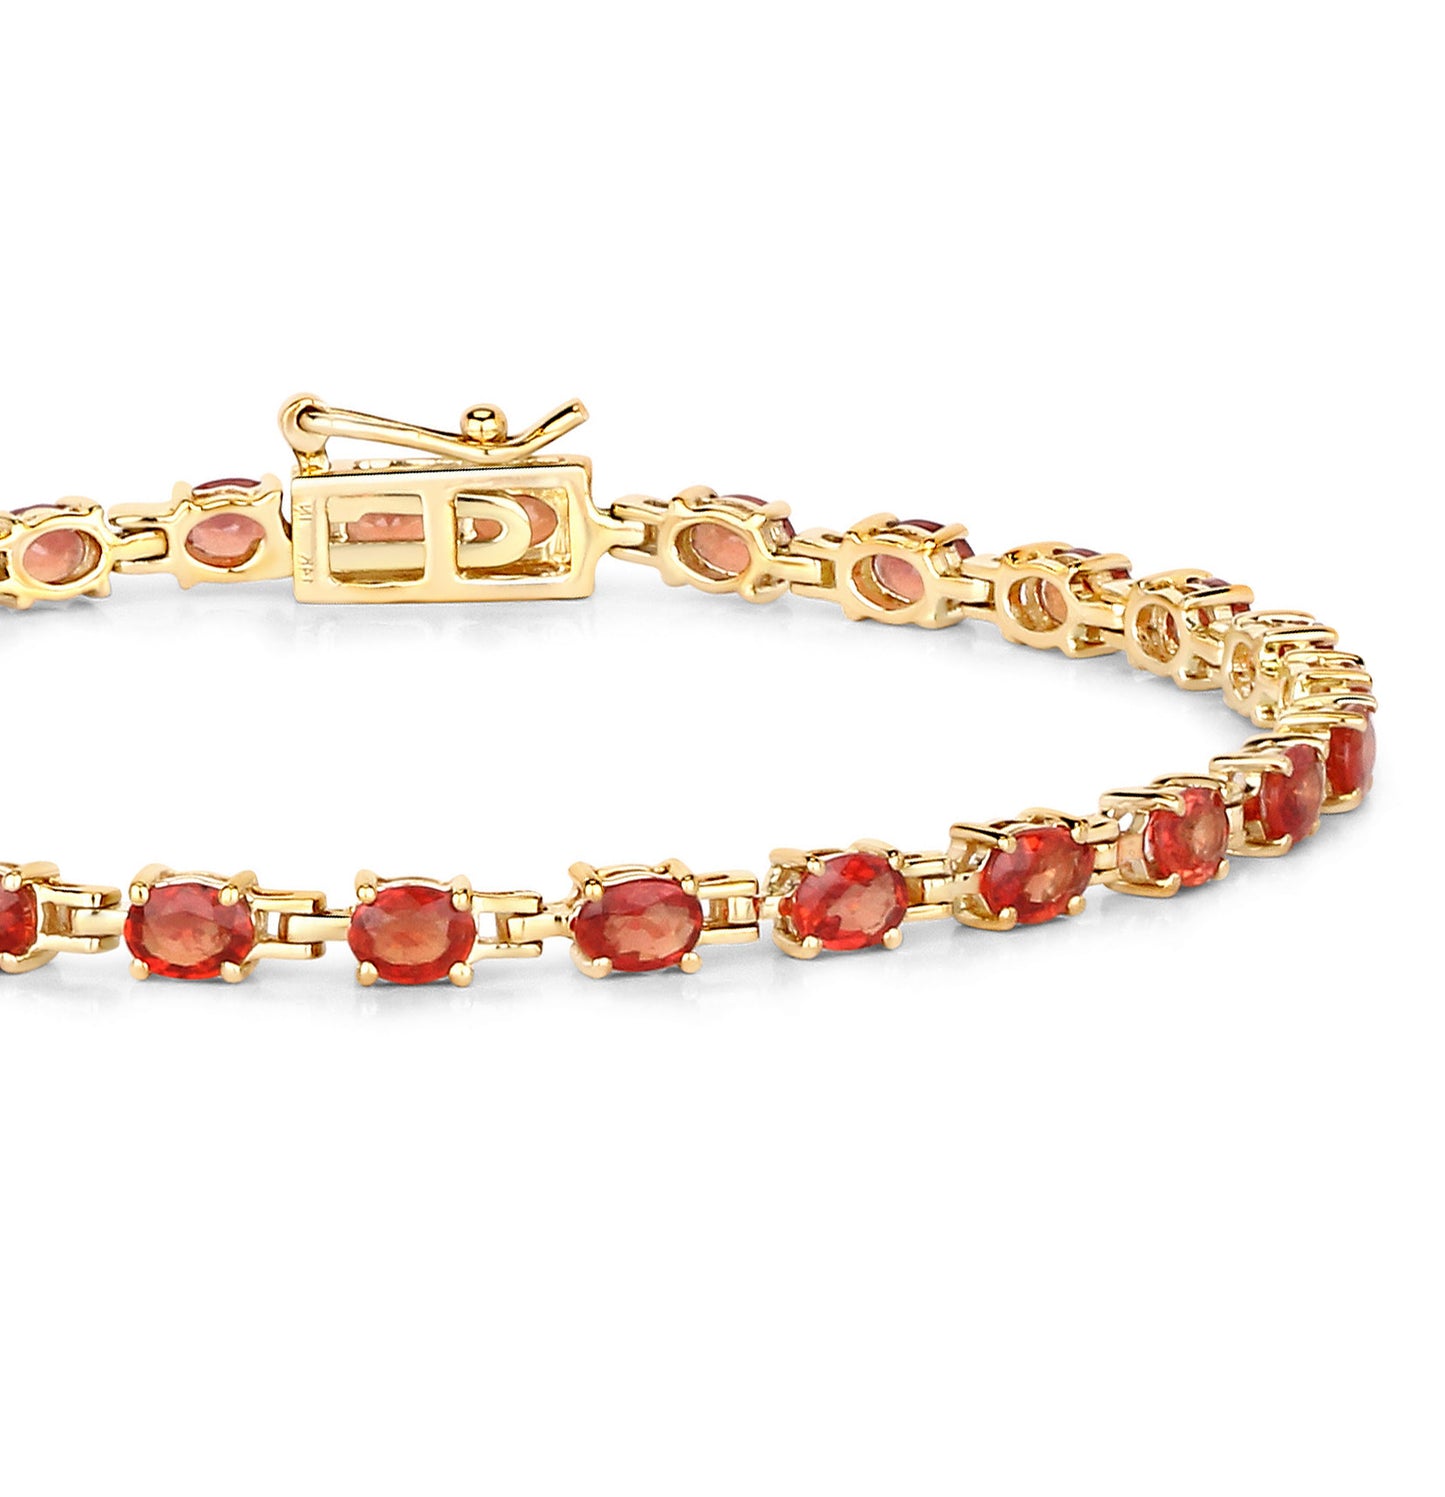 Stunning Natural Red Orange Sapphire Tennis Bracelet 7 Carats 14K Yellow Gold